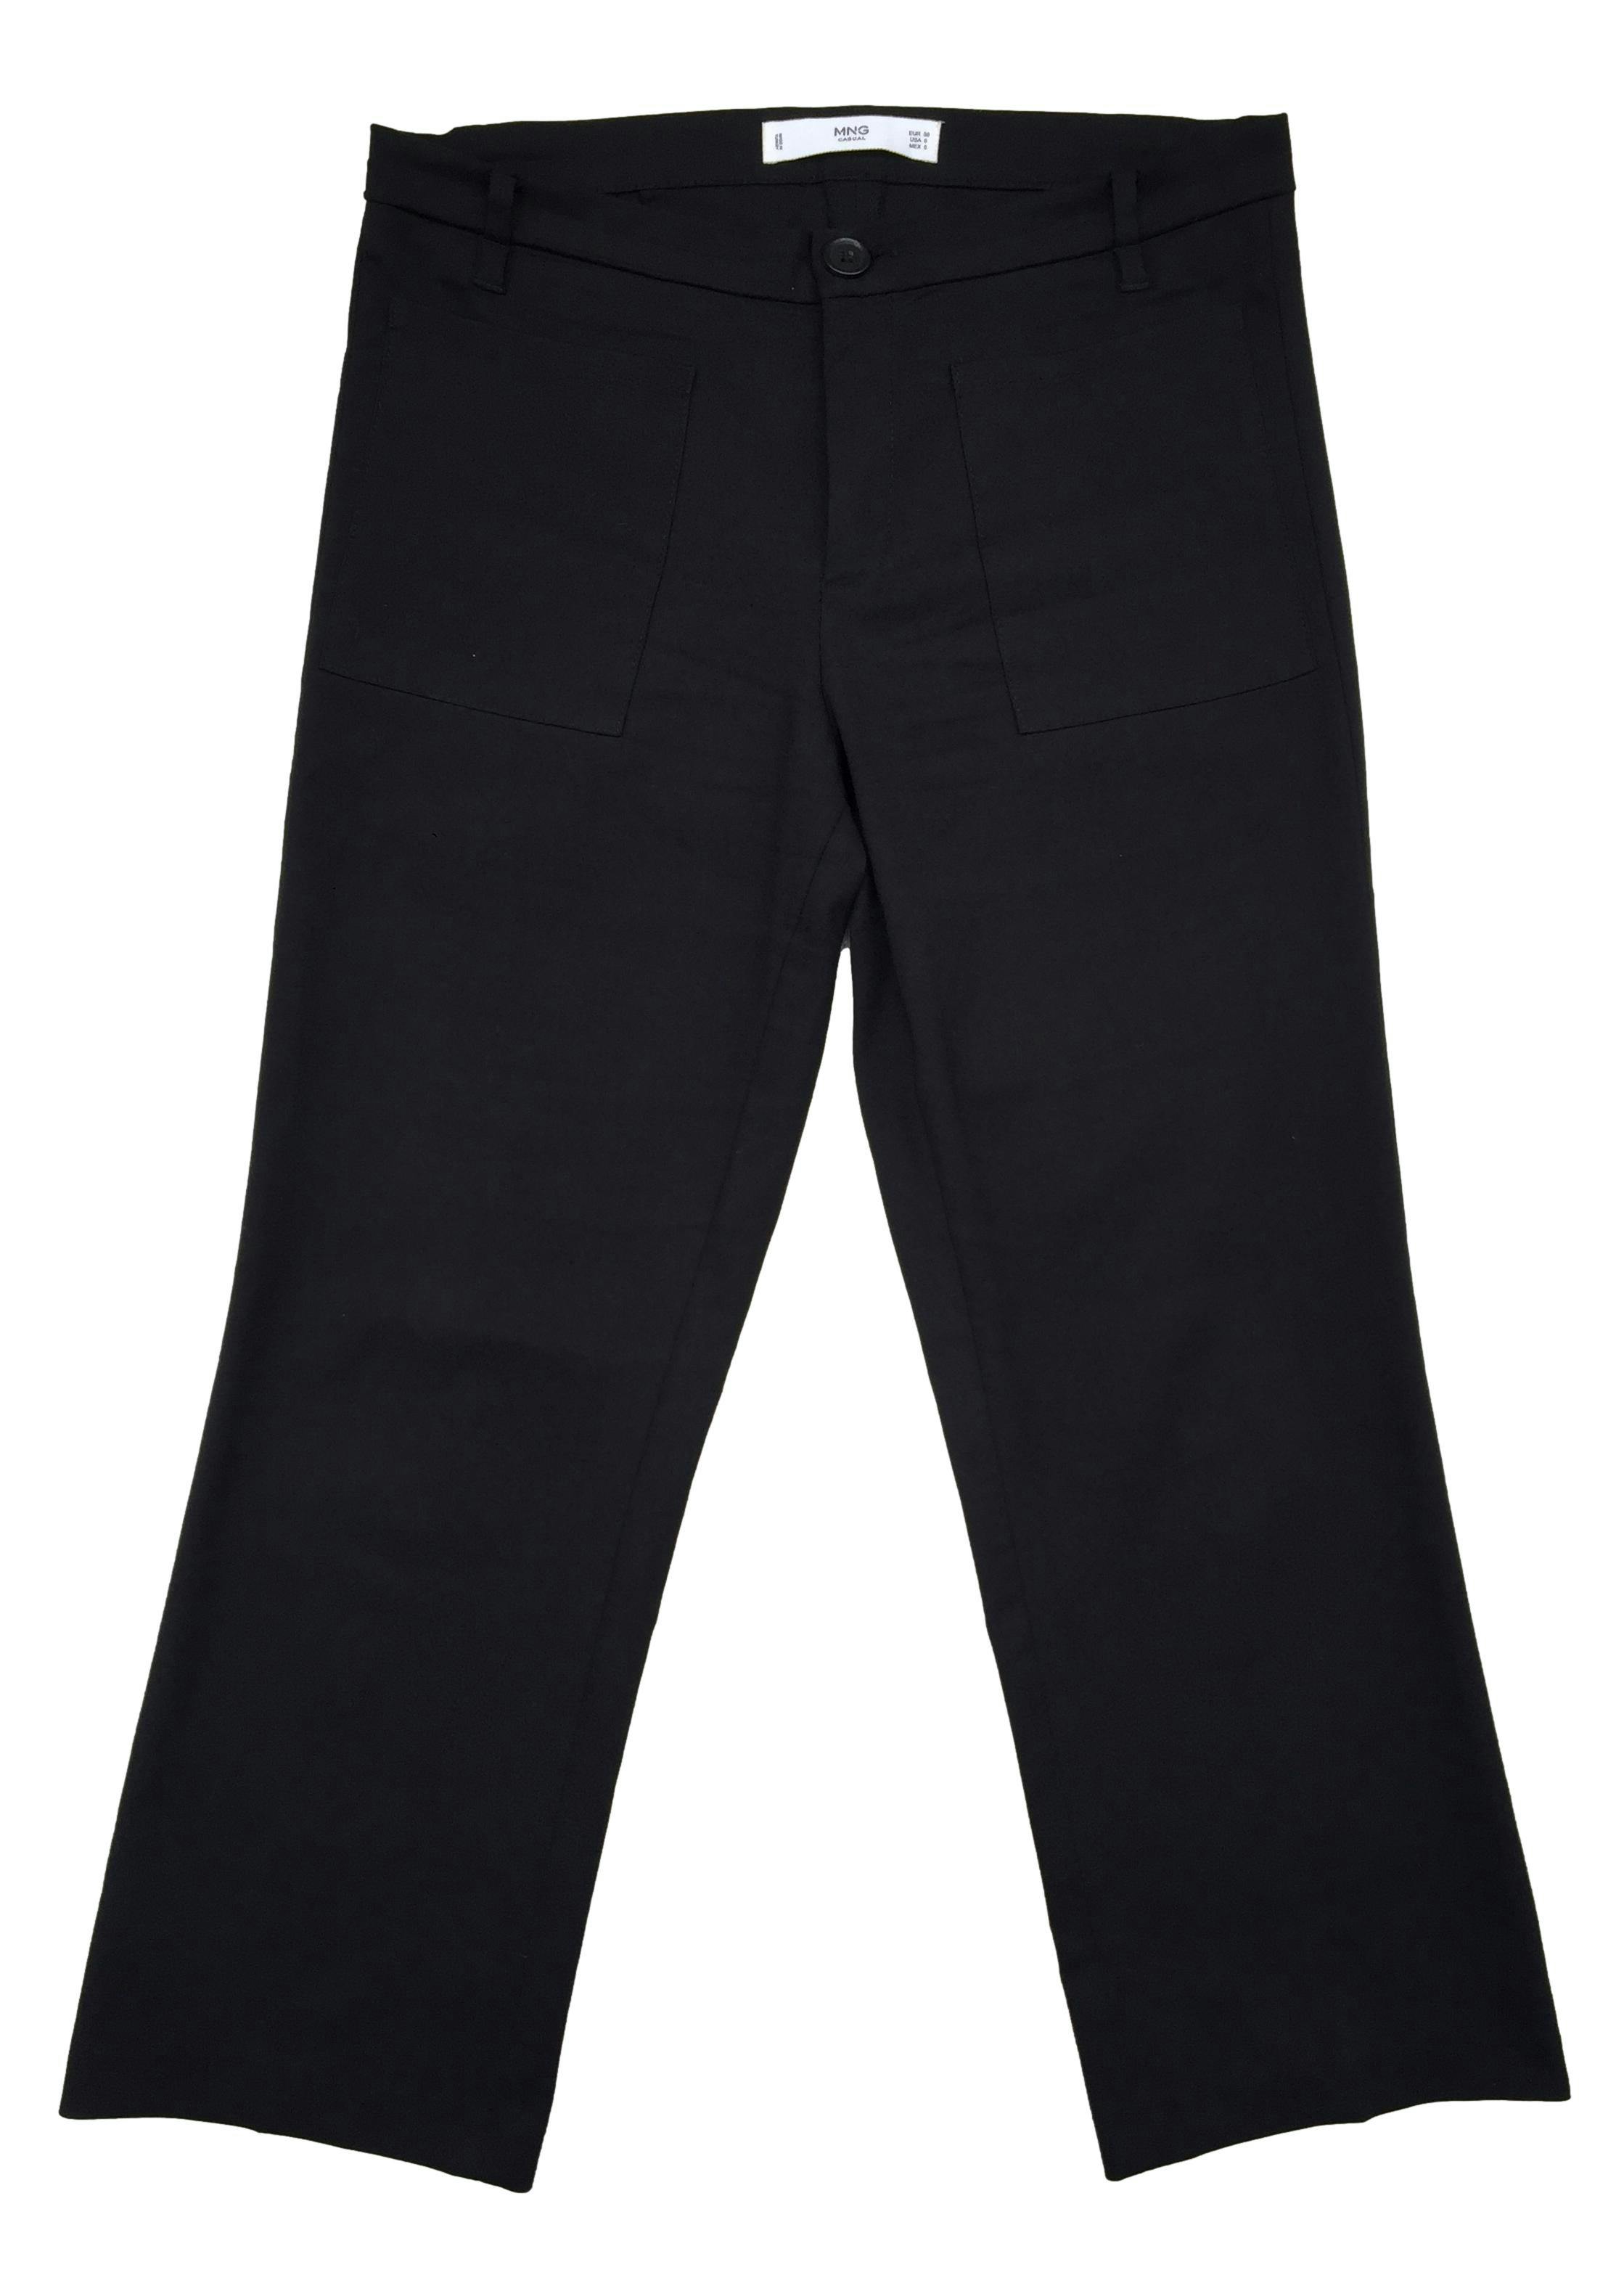 Pantalón negro Mango 53% algodón, bolsillos delanteros. Cintura 80 cm, Tiro 23 cm, Largo 85 cm.